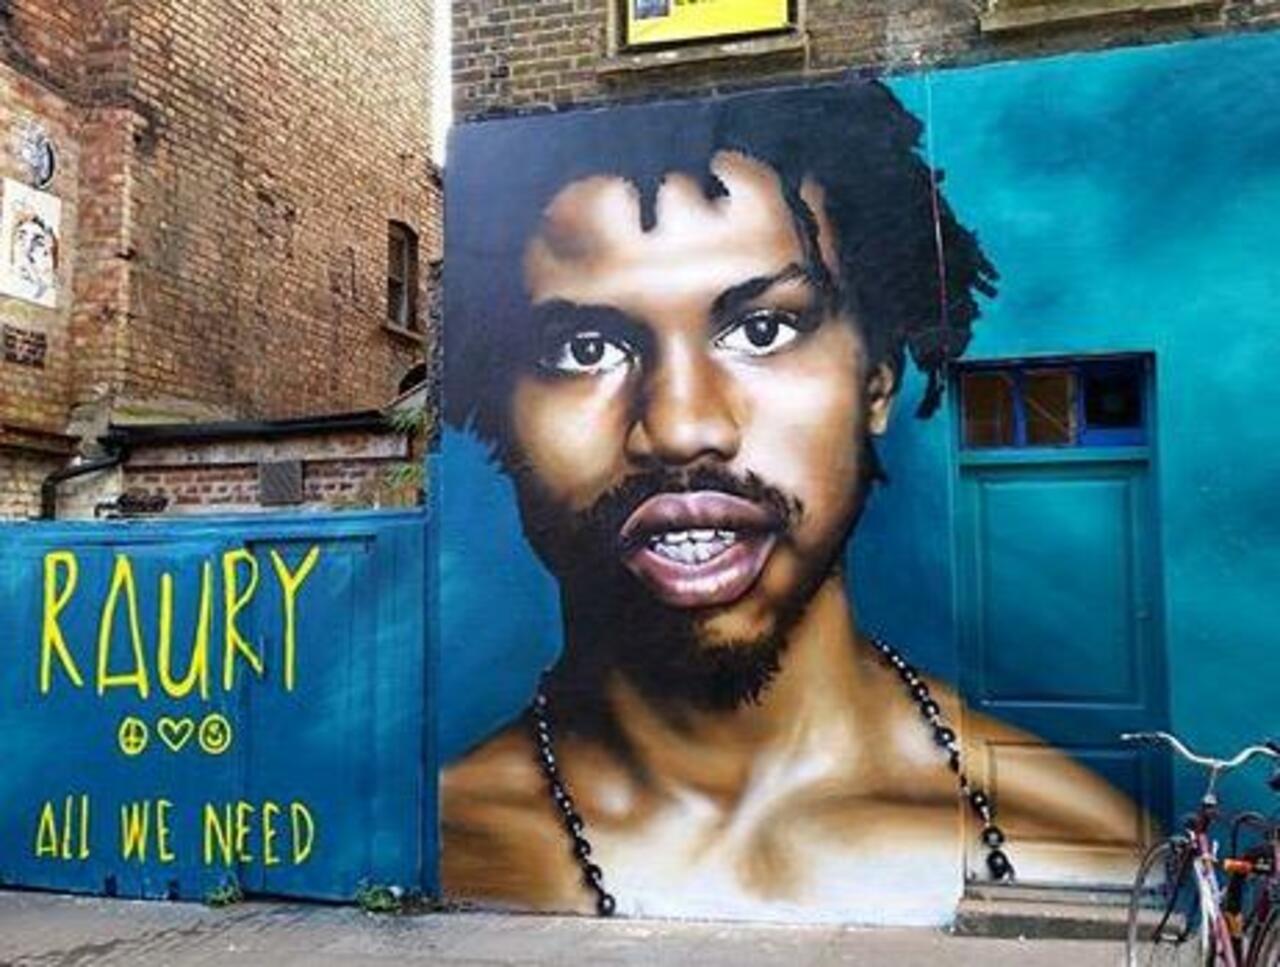 New Street Art of Raury by Olliver Switch in Brick Lane 

#art #graffiti #mural #streetart http://t.co/uPy4IUI5ft